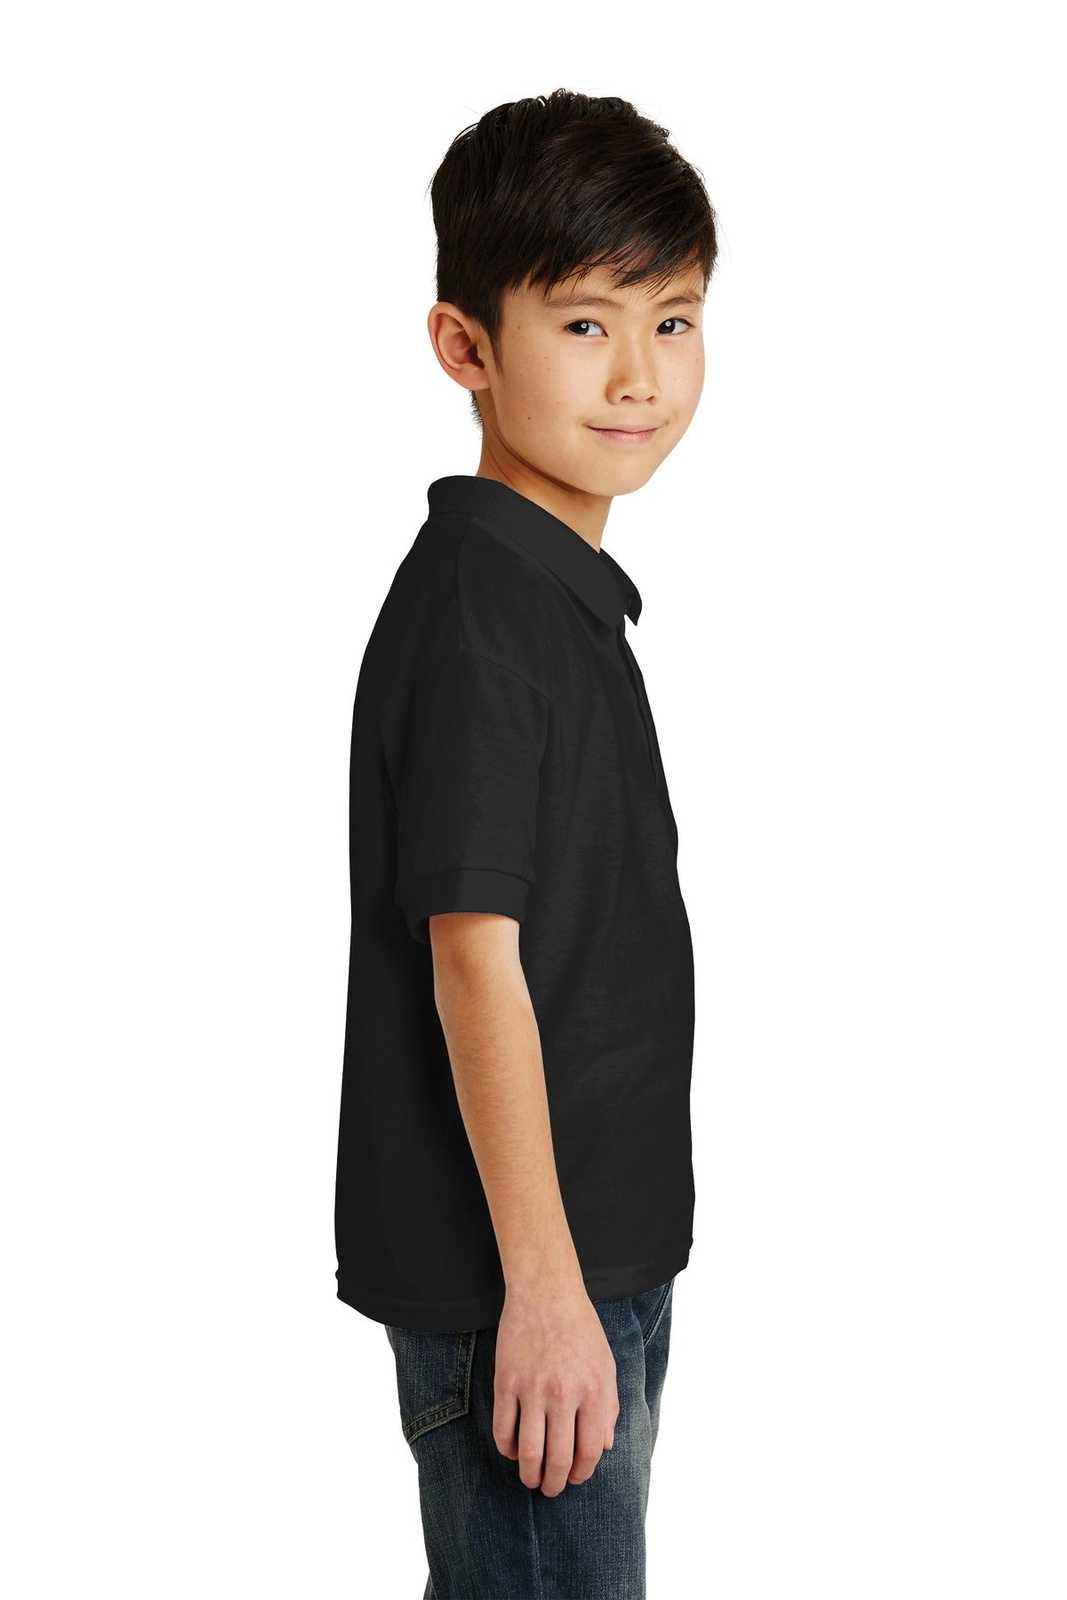 Gildan 8800B Youth Dryblend 6-Ounce Jersey Knit Sport Shirt - Black - HIT a Double